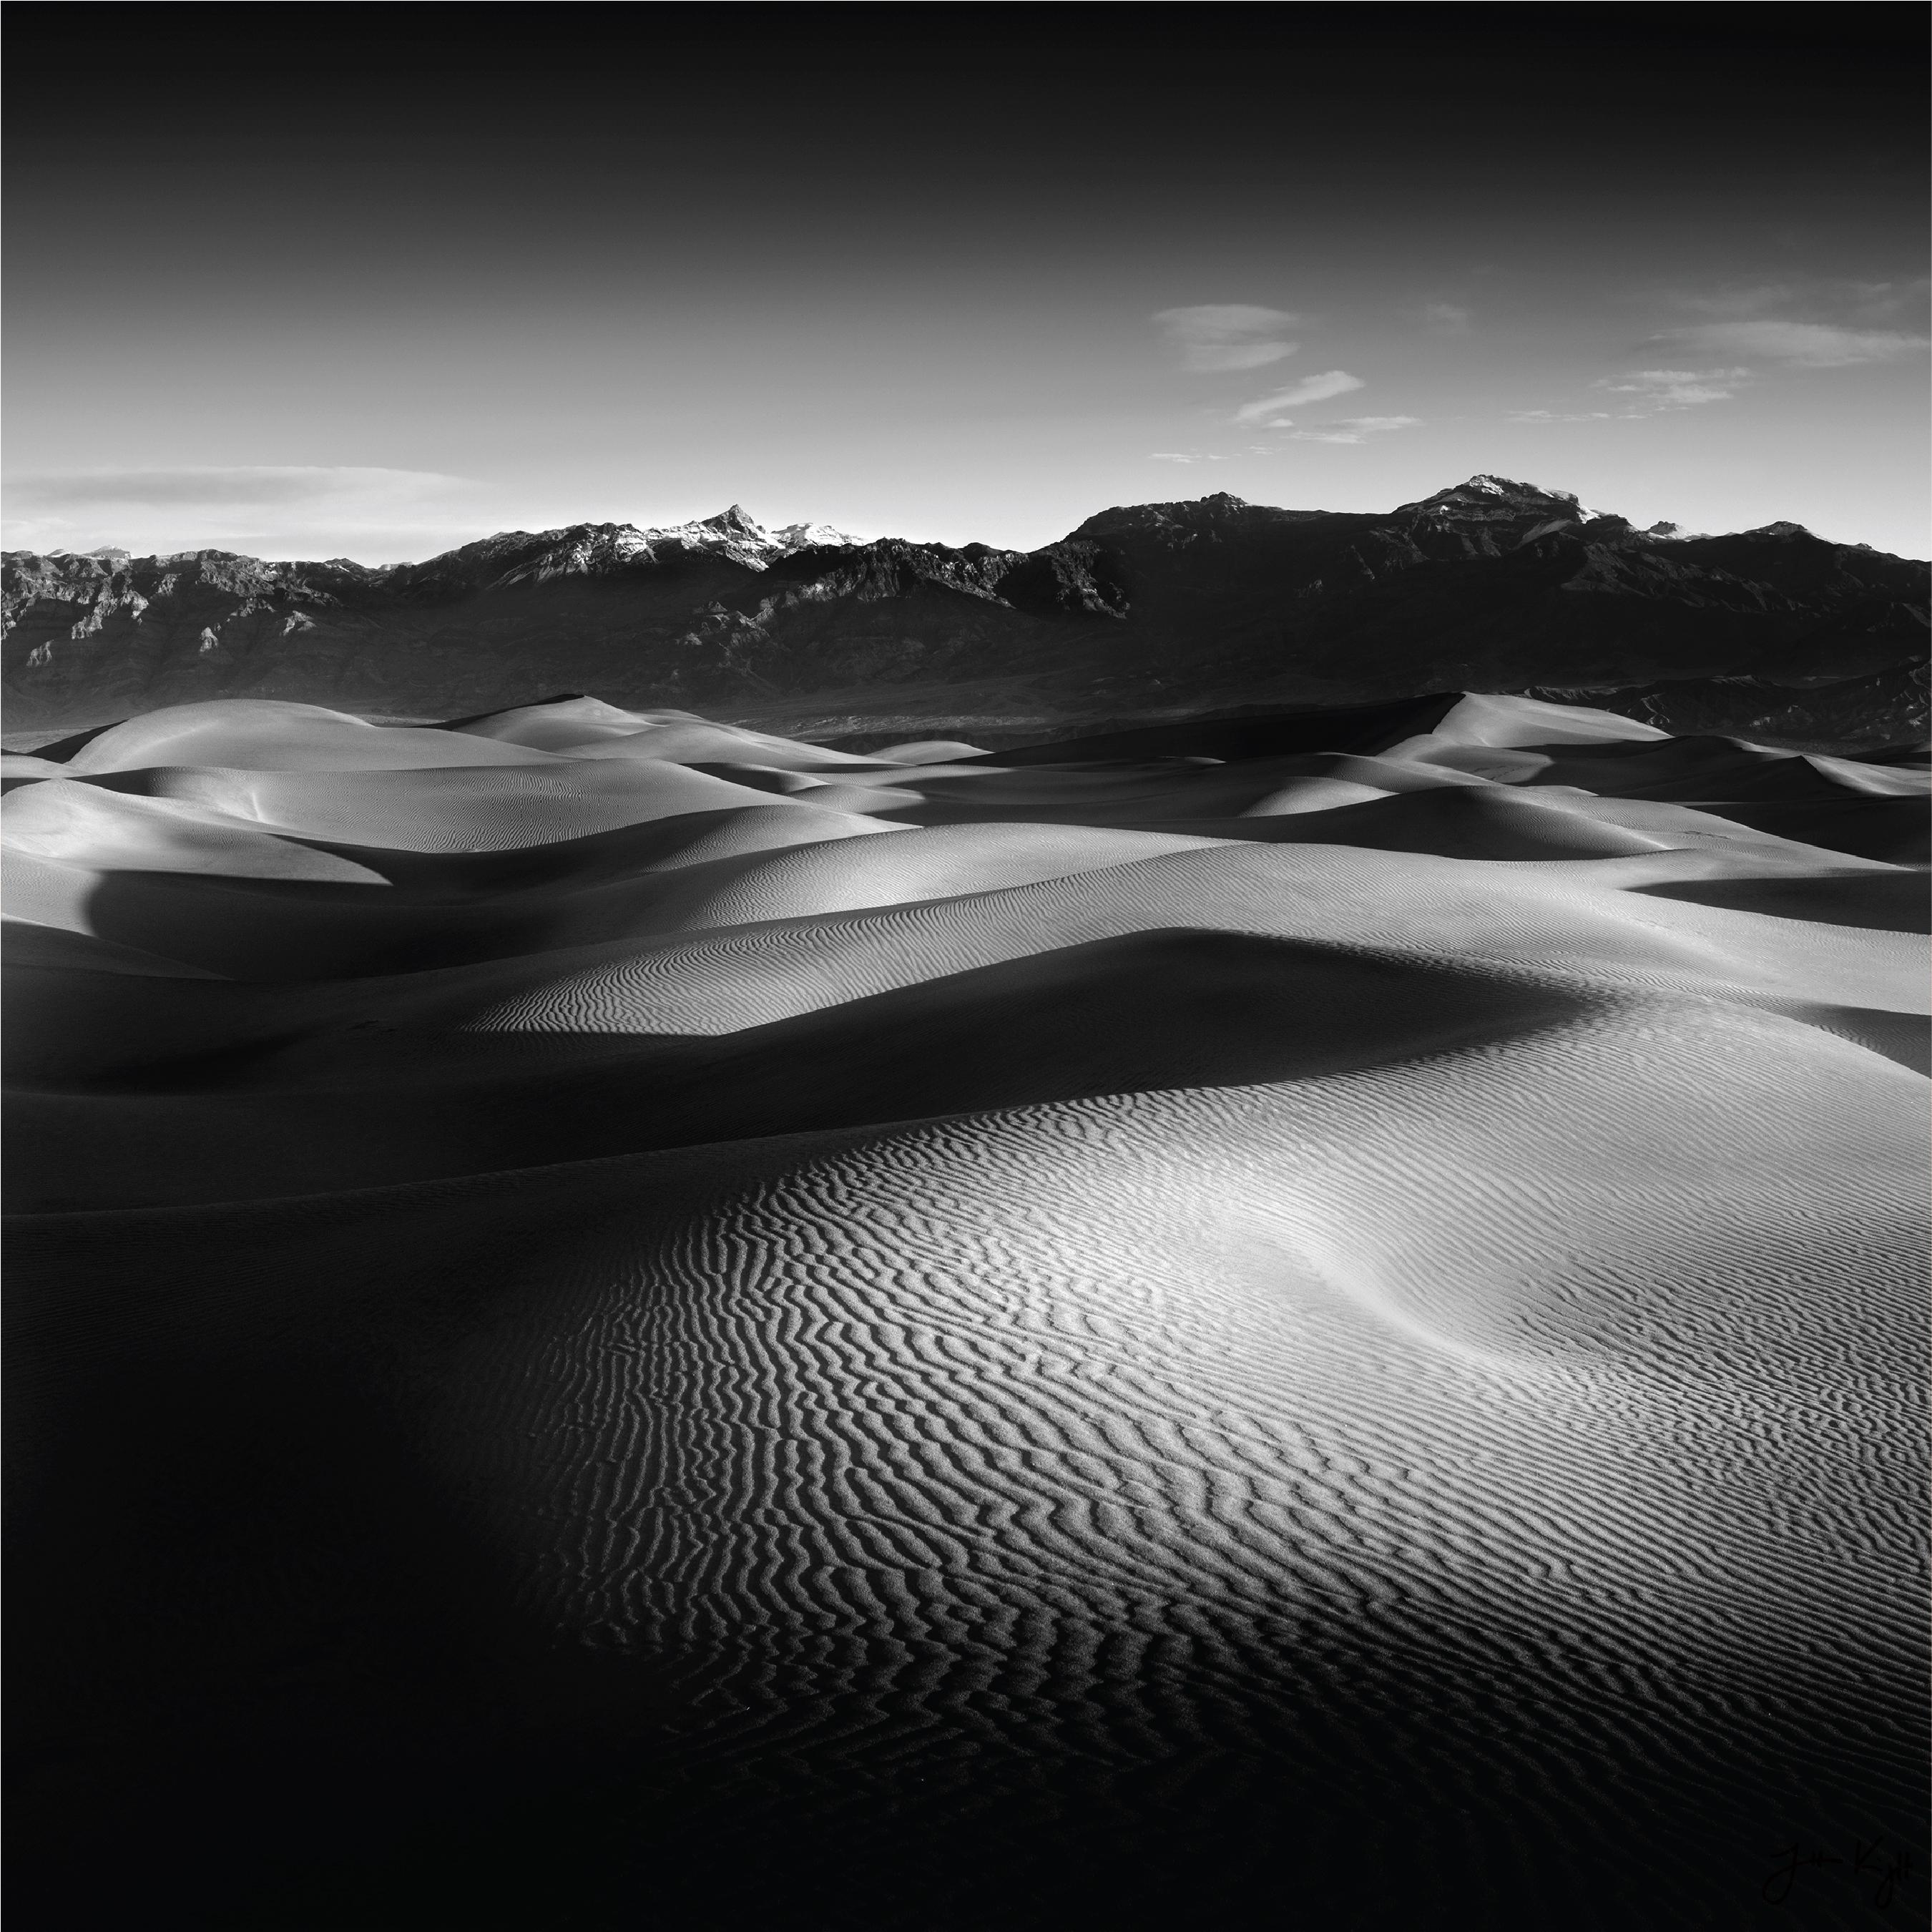 Jonathan Knight Landscape Photograph - Summit & Dunes, Death Valley. Fine art black & white landscape photography print